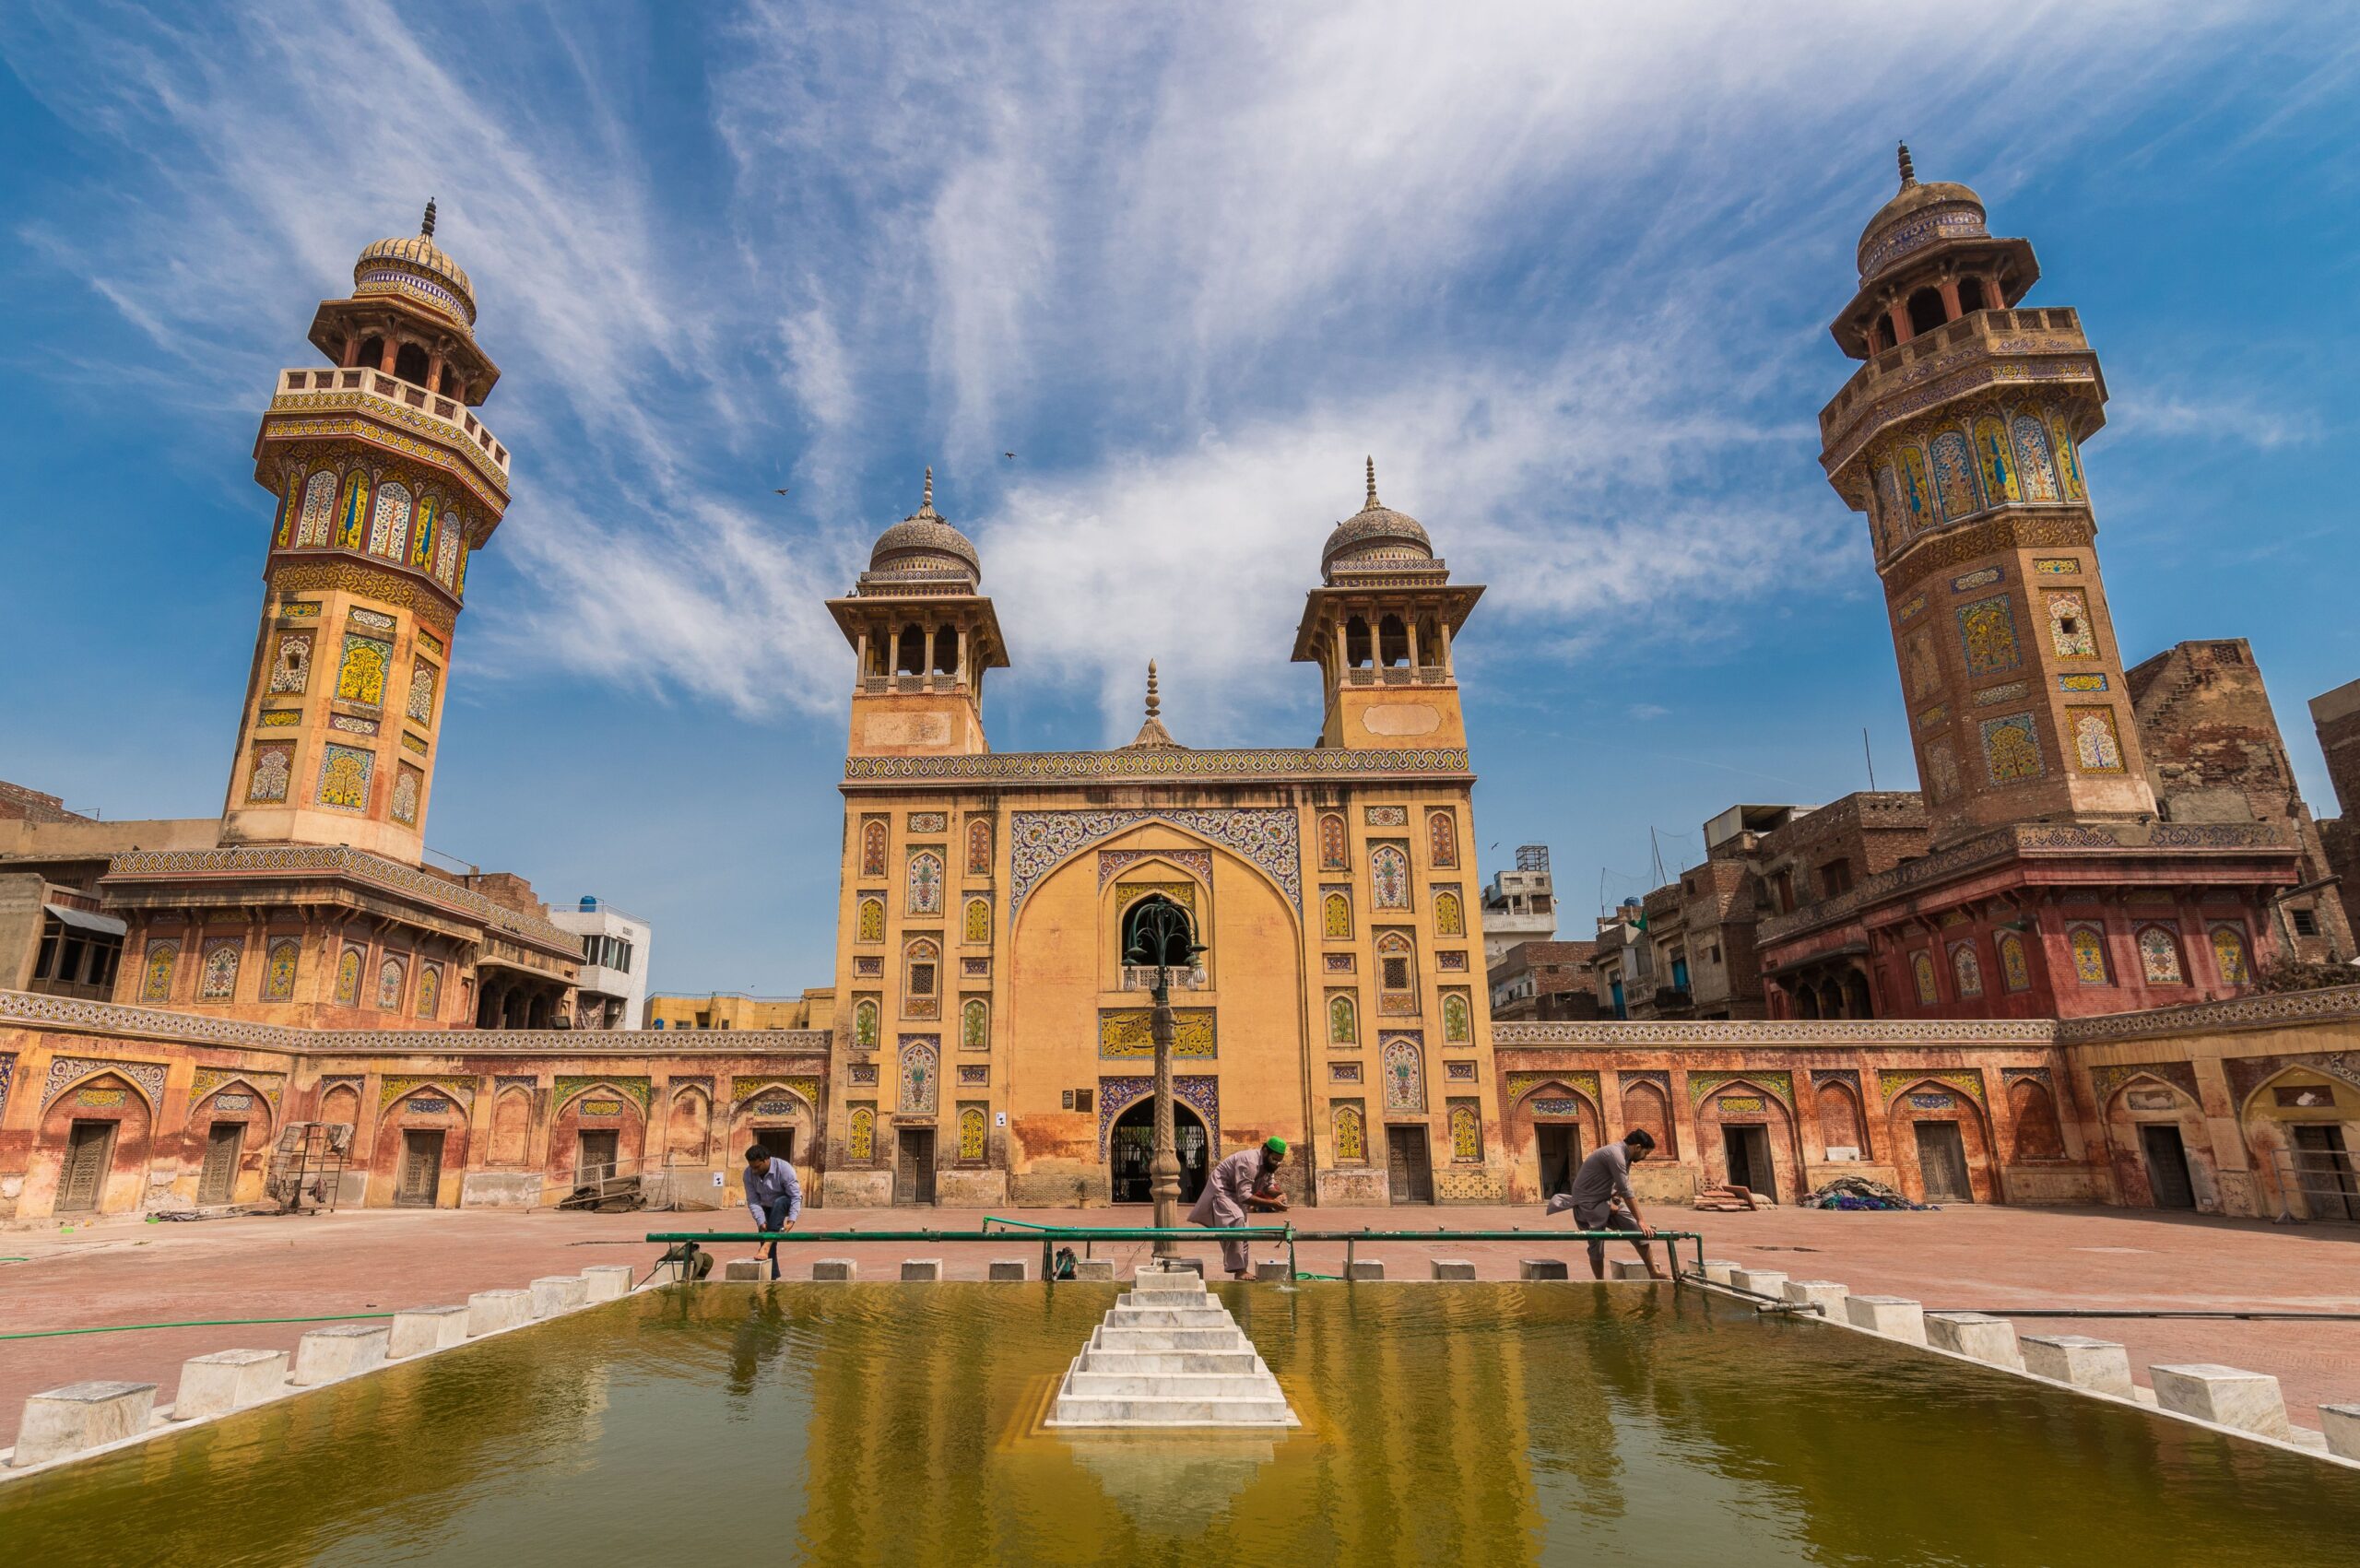 wazir khan mosque - historical places in pakistan - ahgroup-pk